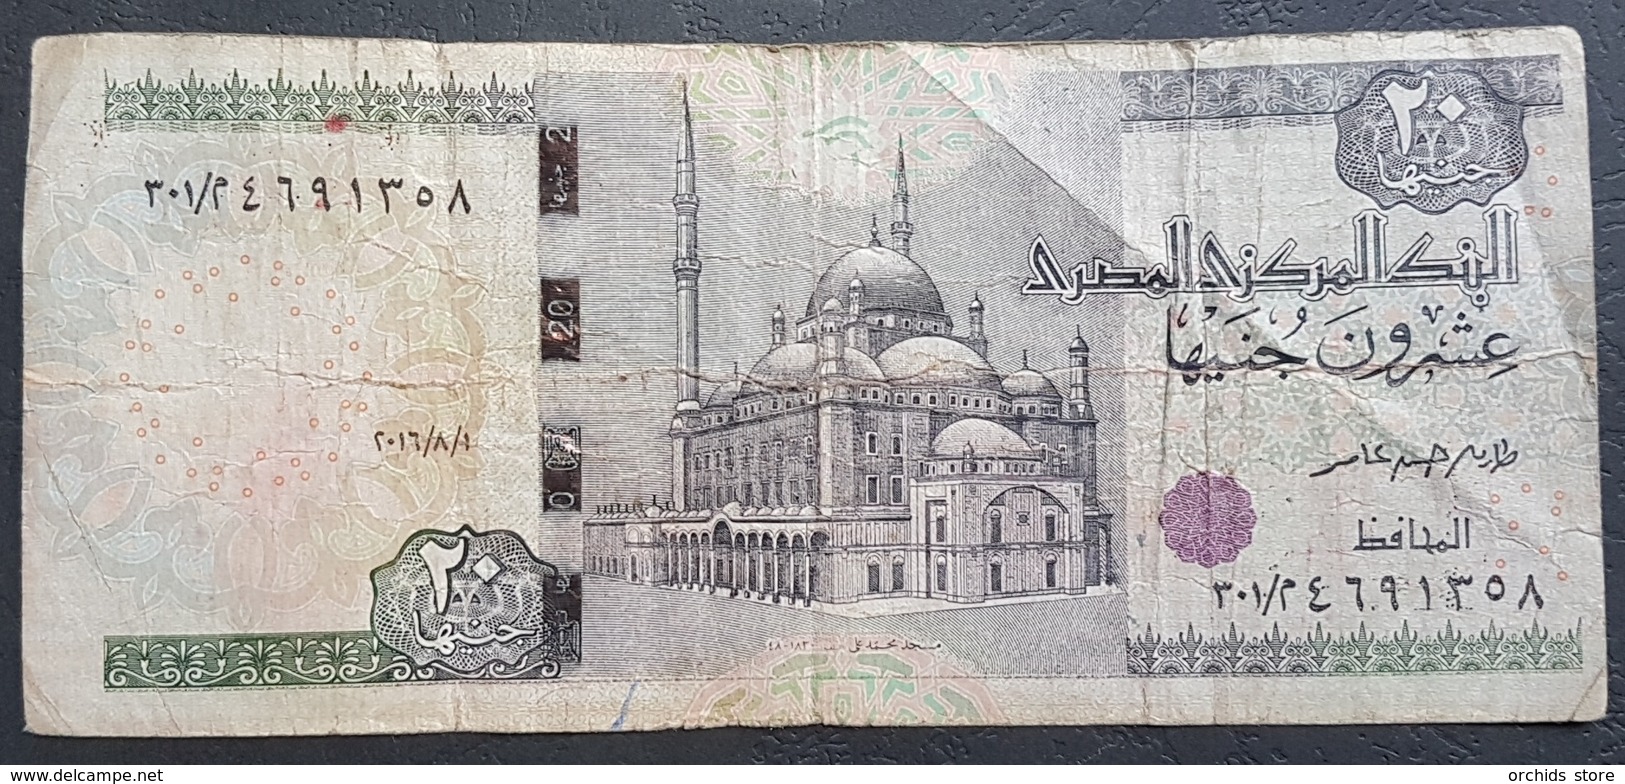 OA - Egypt 20 Pounds Banknote 2016 @ Face Value - Egypt